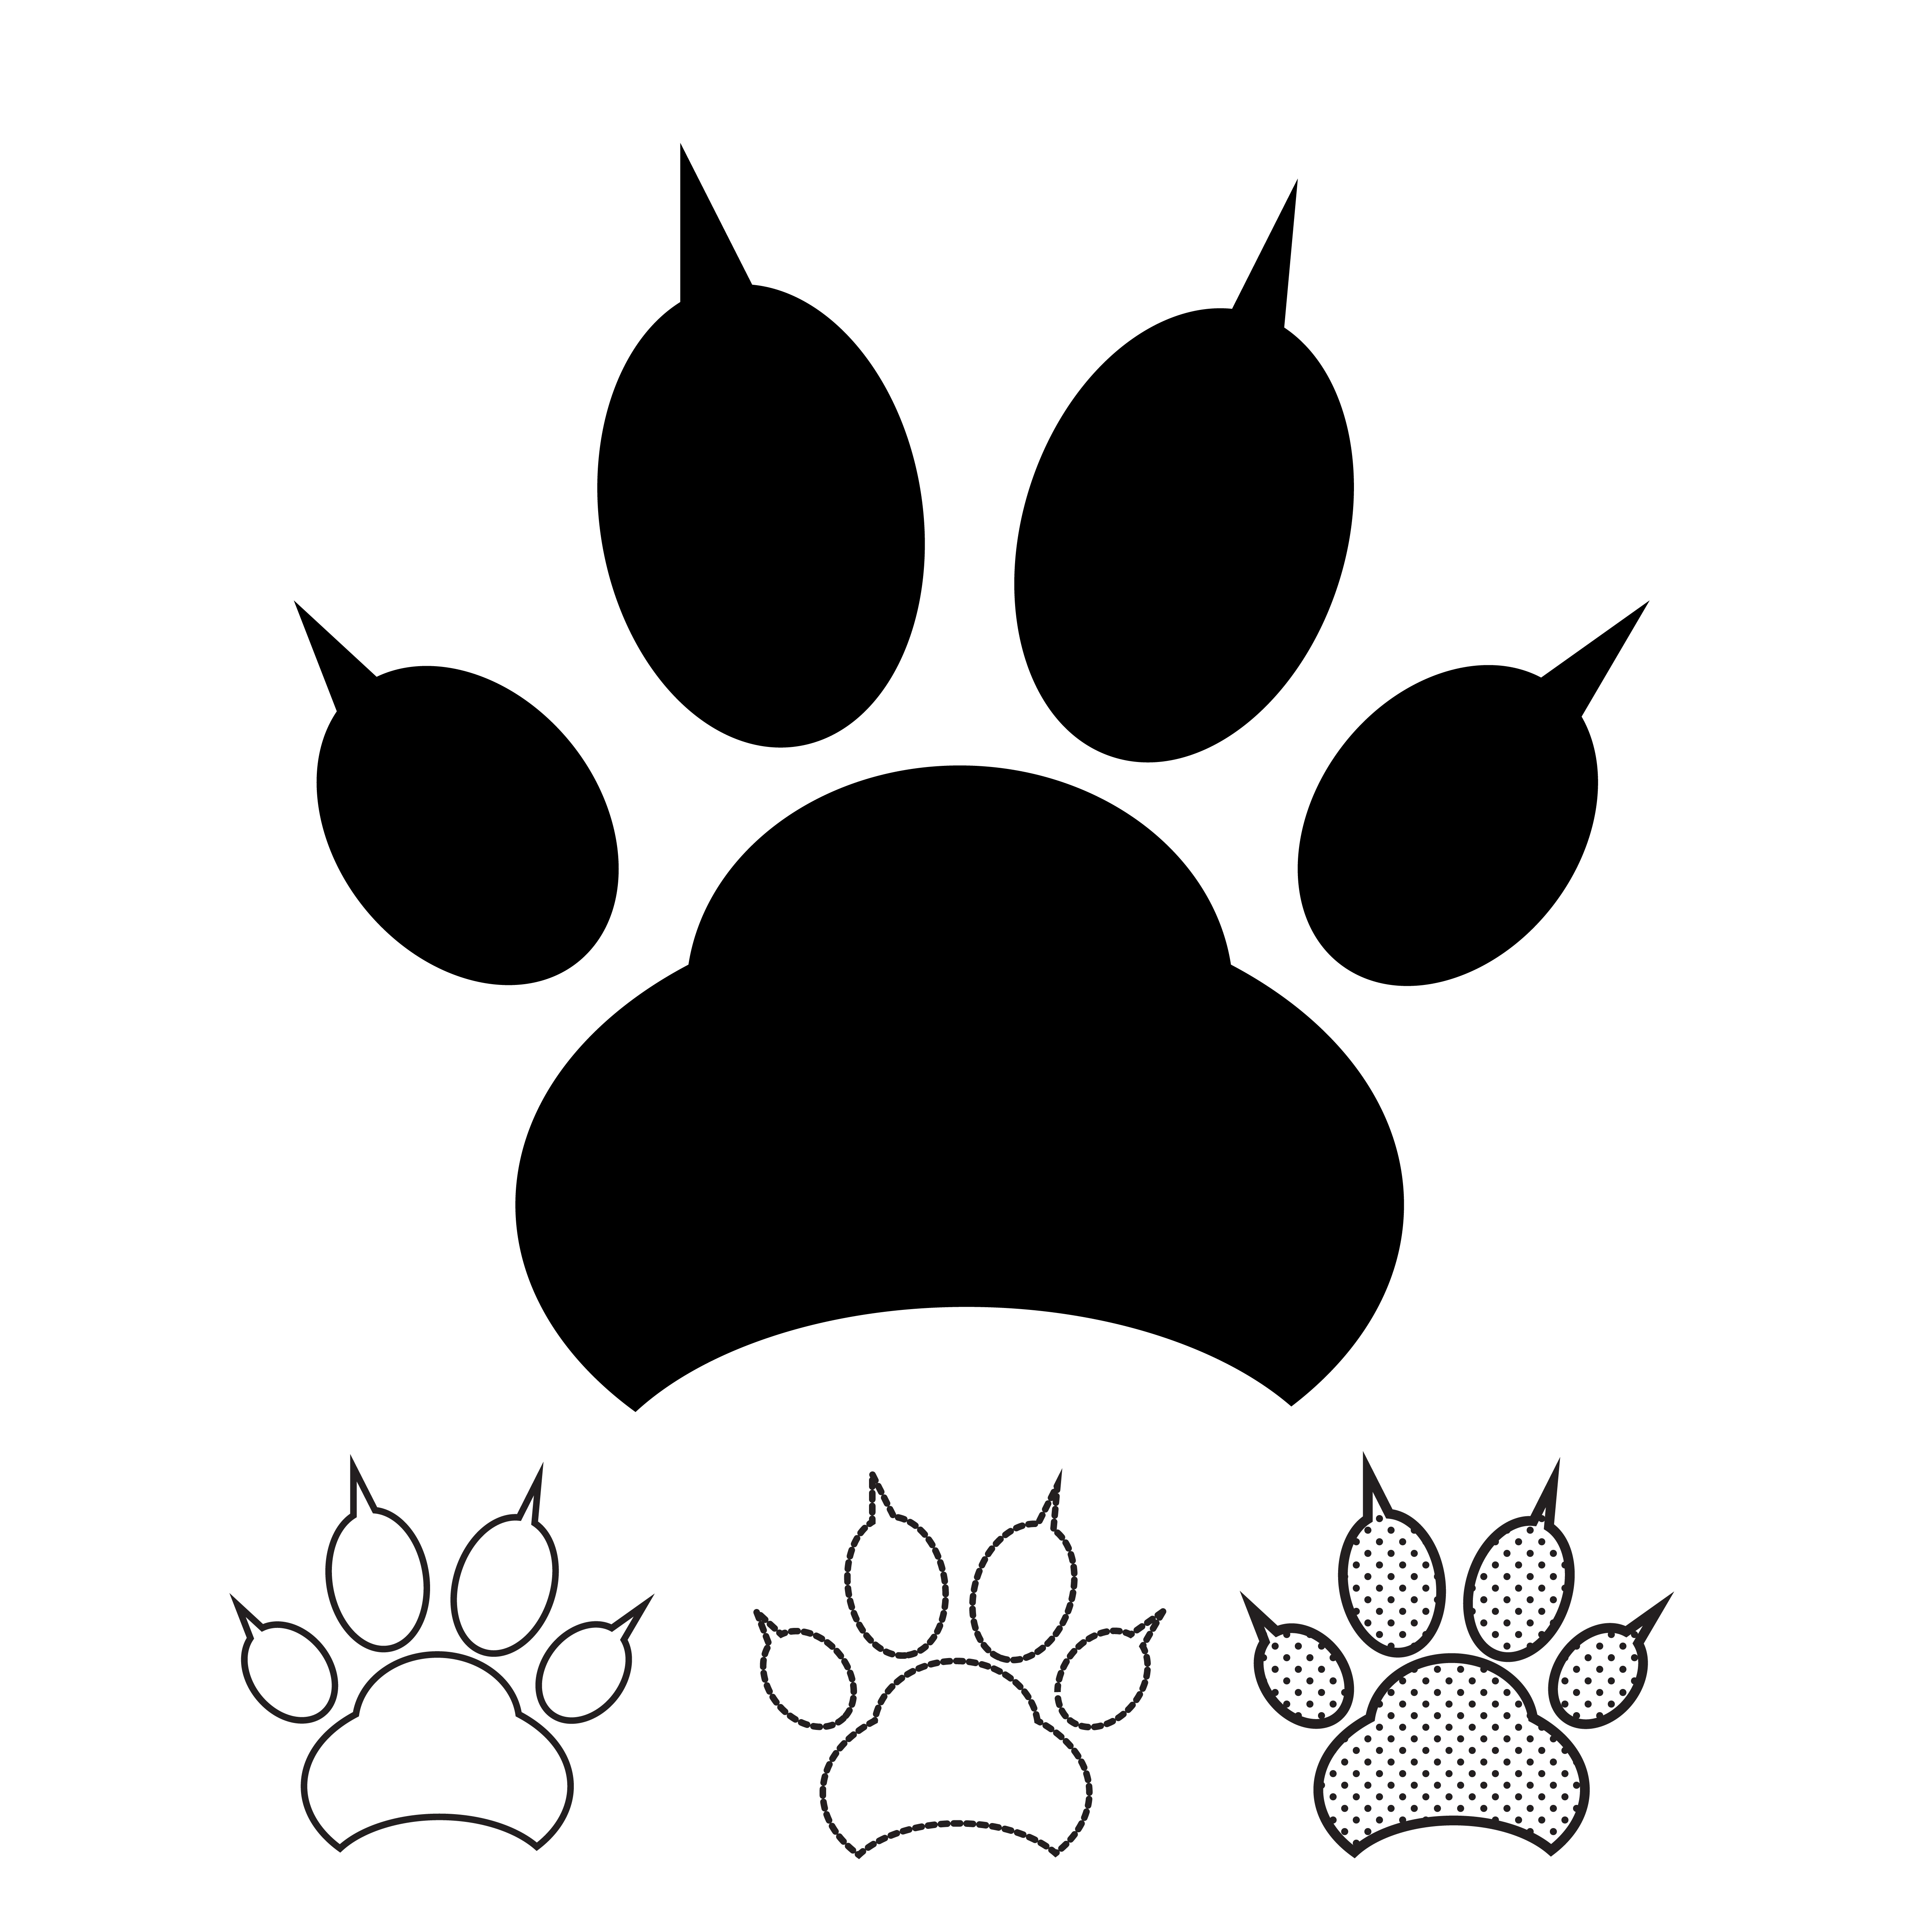 Download Animal footprint Icon Vector 571781 - Download Free Vectors, Clipart Graphics & Vector Art